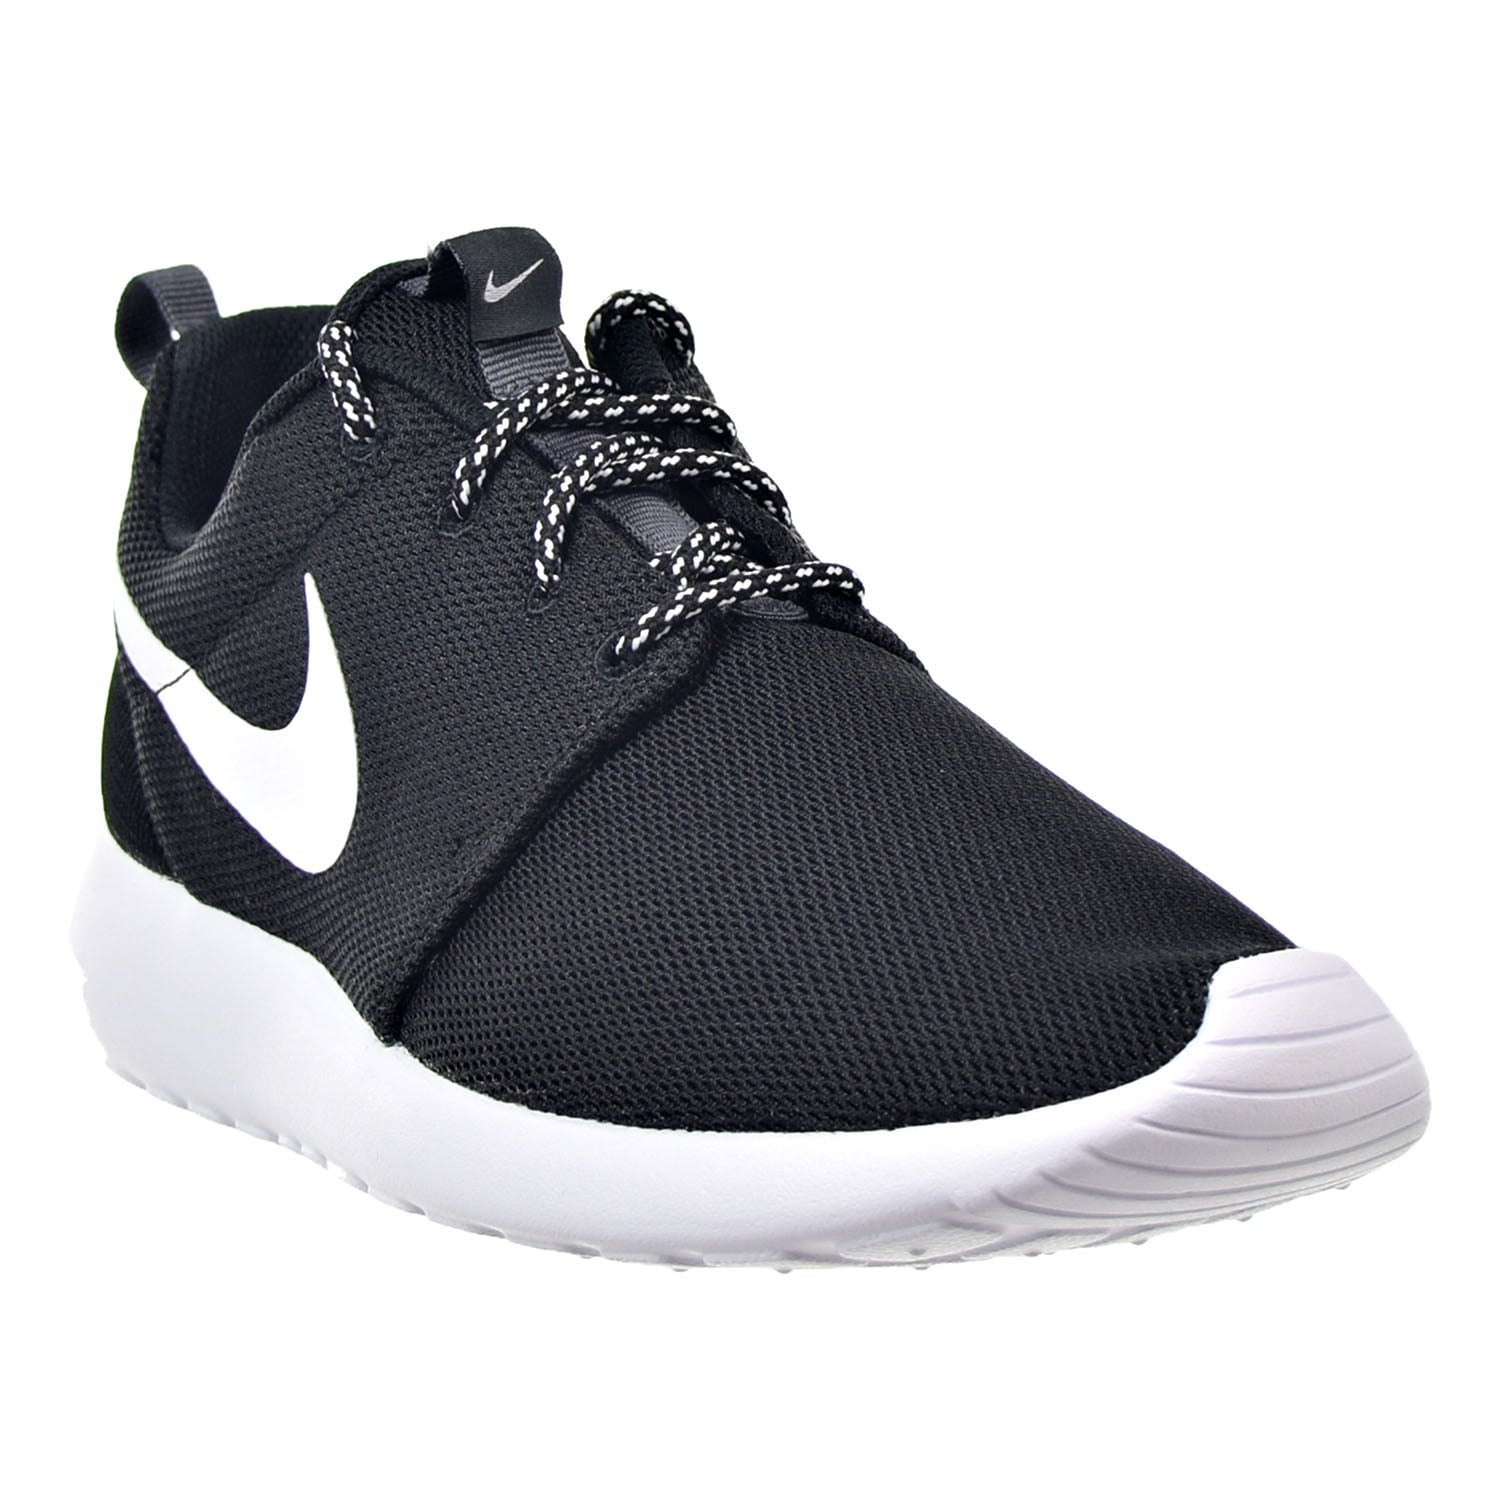 Extracto El aparato microondas Nike Roshe One Women's Shoes Black/White/Dark Grey 844994-002 (9 B(M) US) -  Walmart.com